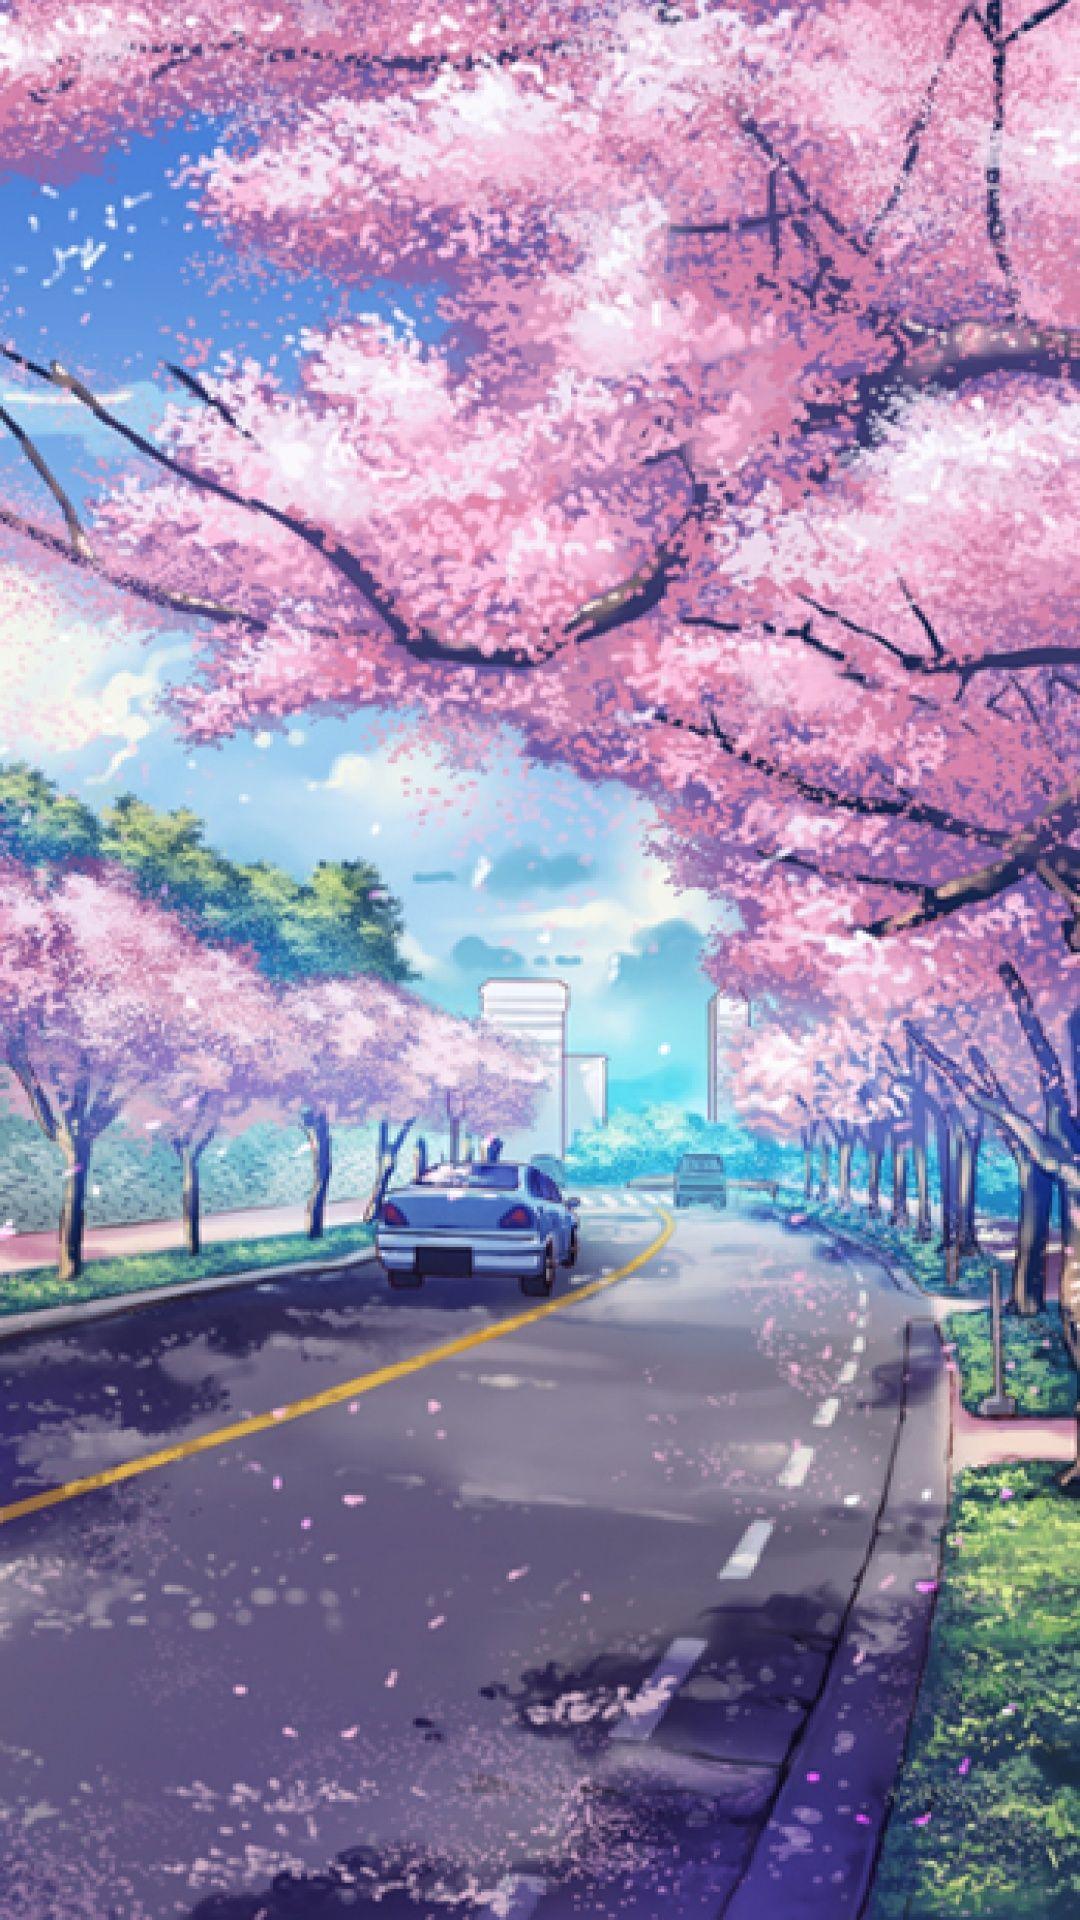 Anime Scenery Iphone Wallpapers Top Free Anime Scenery Iphone